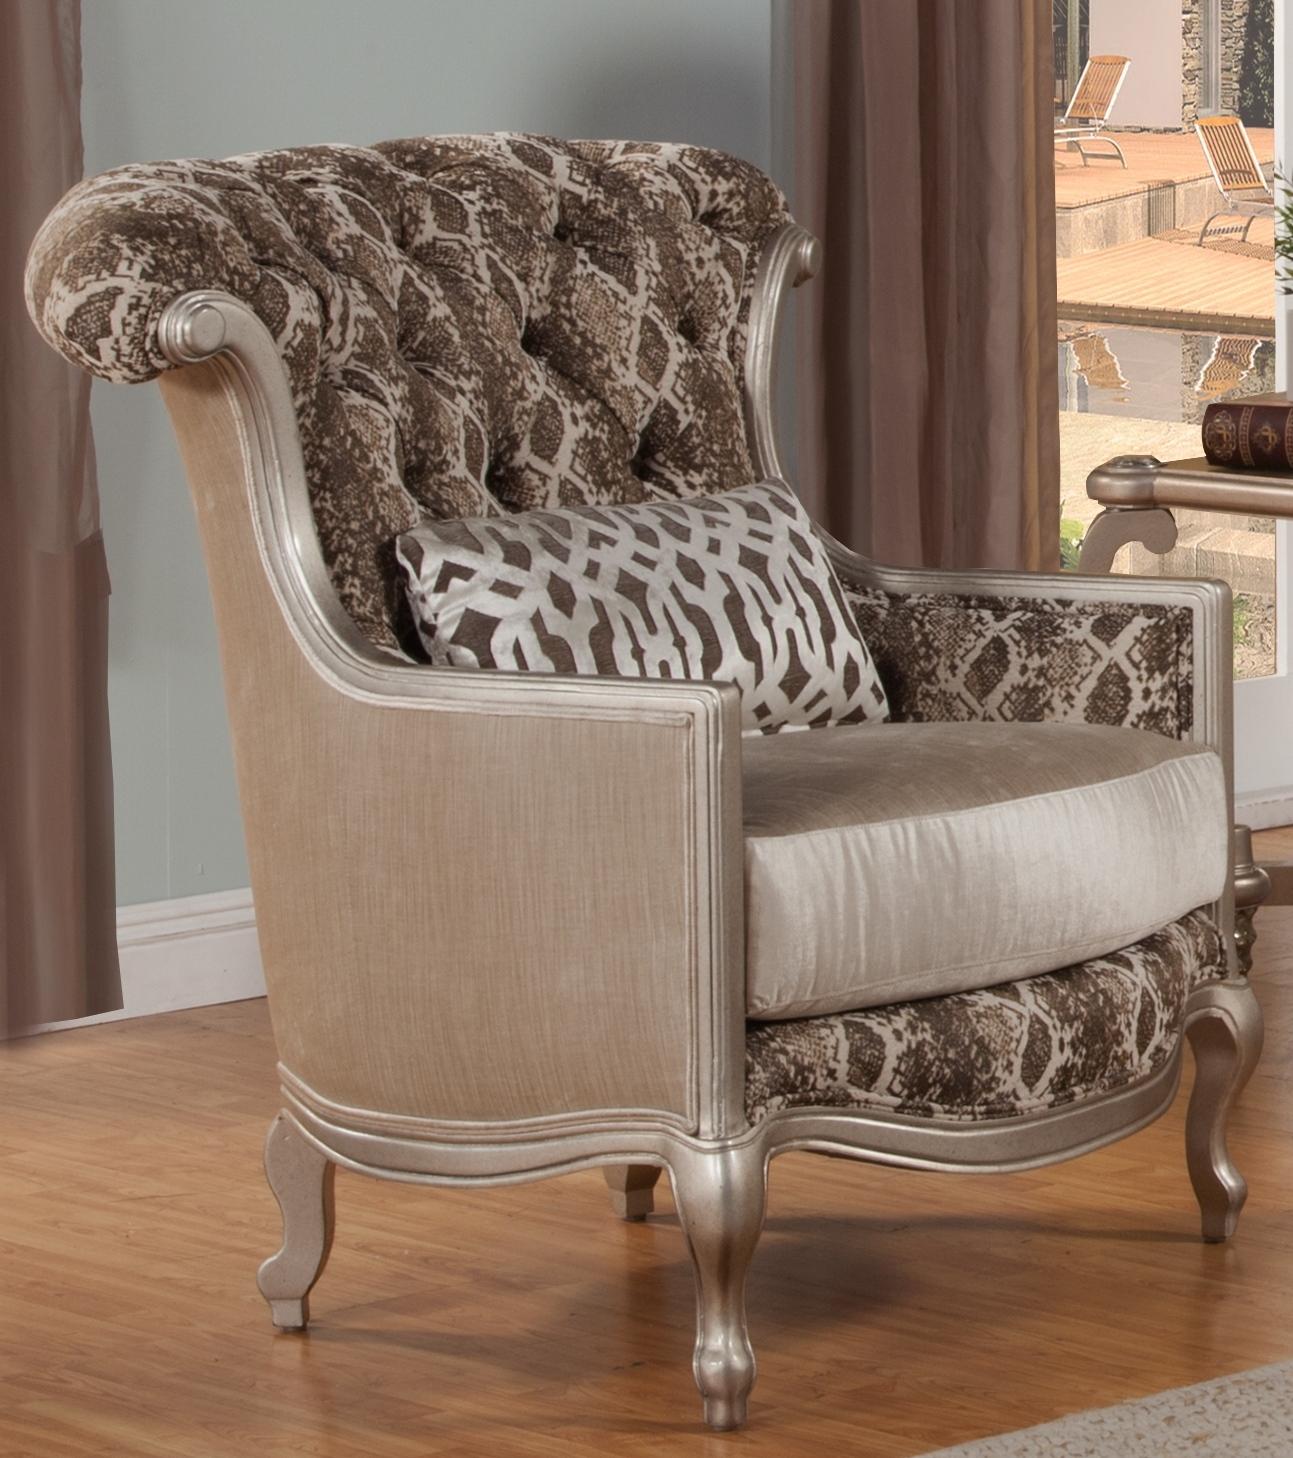 

                    
Benetti Furniture Sofia Lilliana Chaise Lounge and Accent Chair Pearl White/Antique/Silver/Gold Chenille Purchase 
